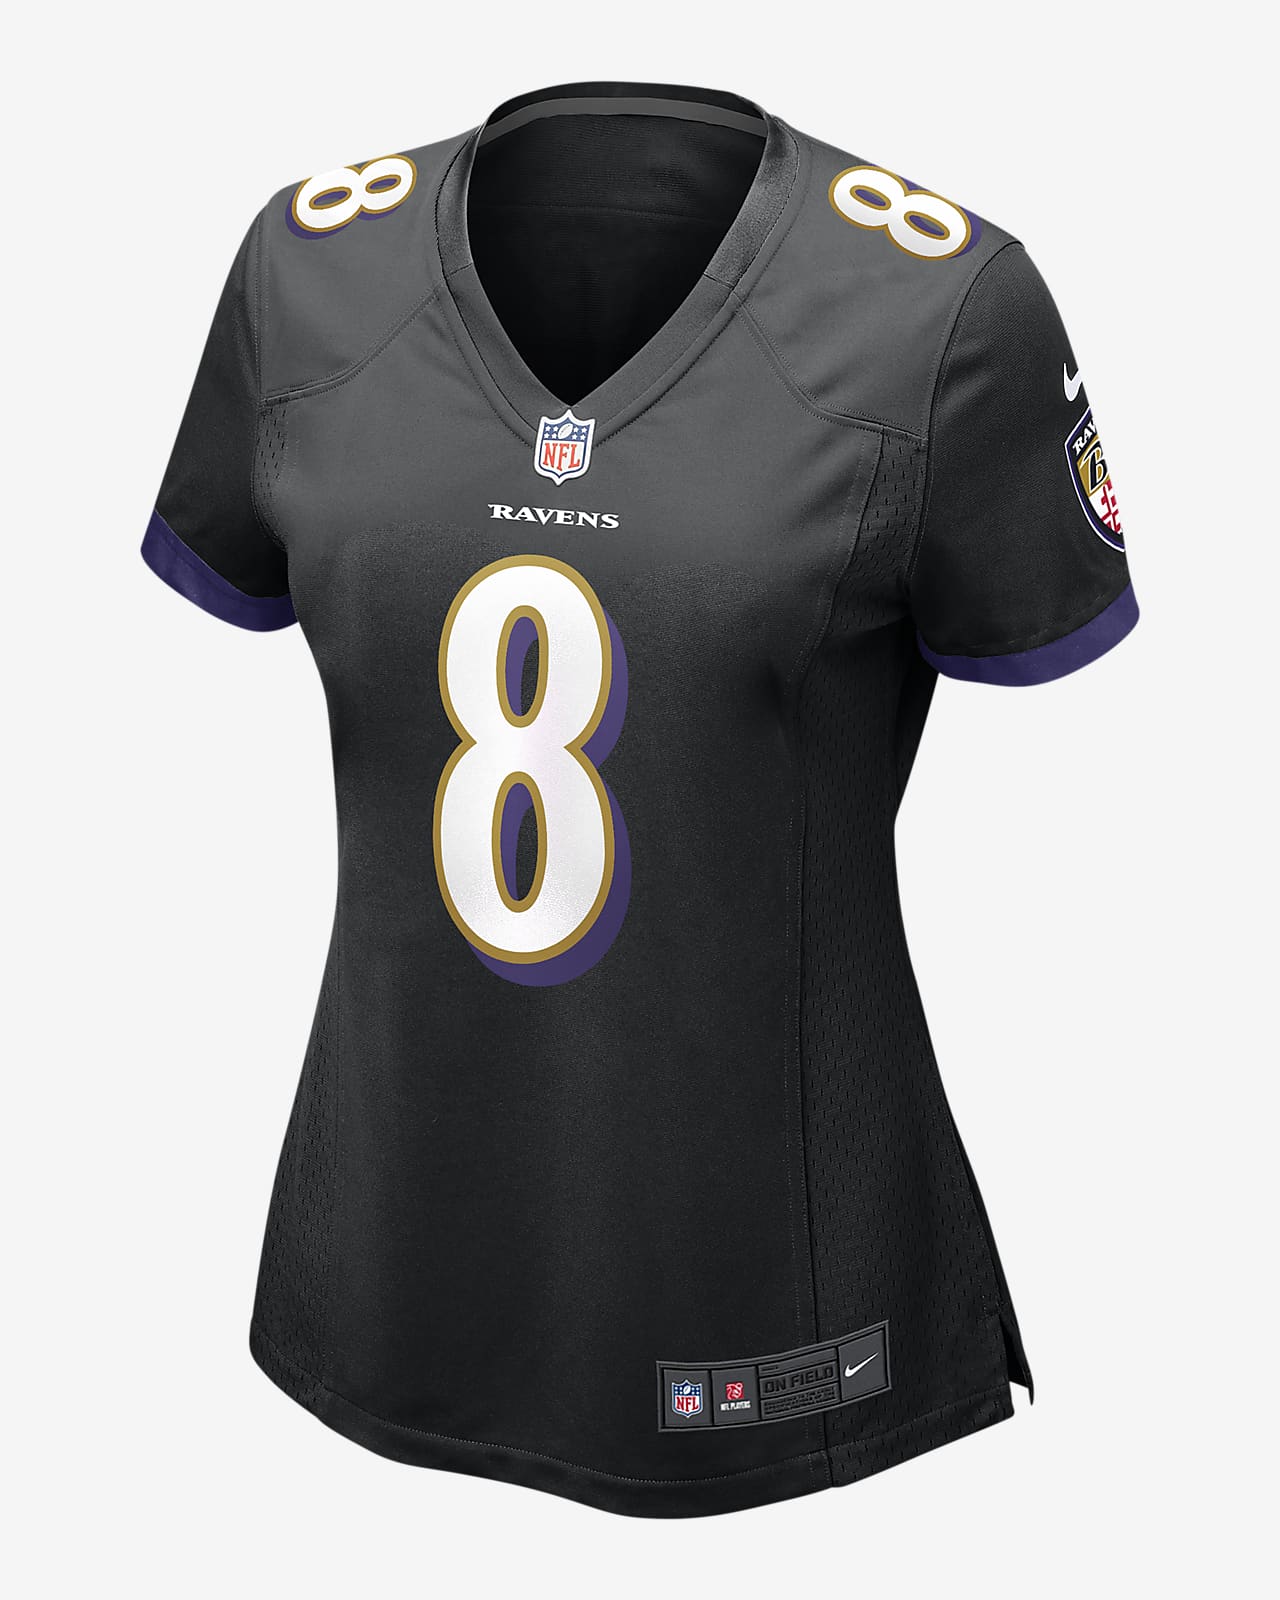 Camiseta de fútbol americano para hombre NFL Baltimore Ravens (Lamar Jackson)